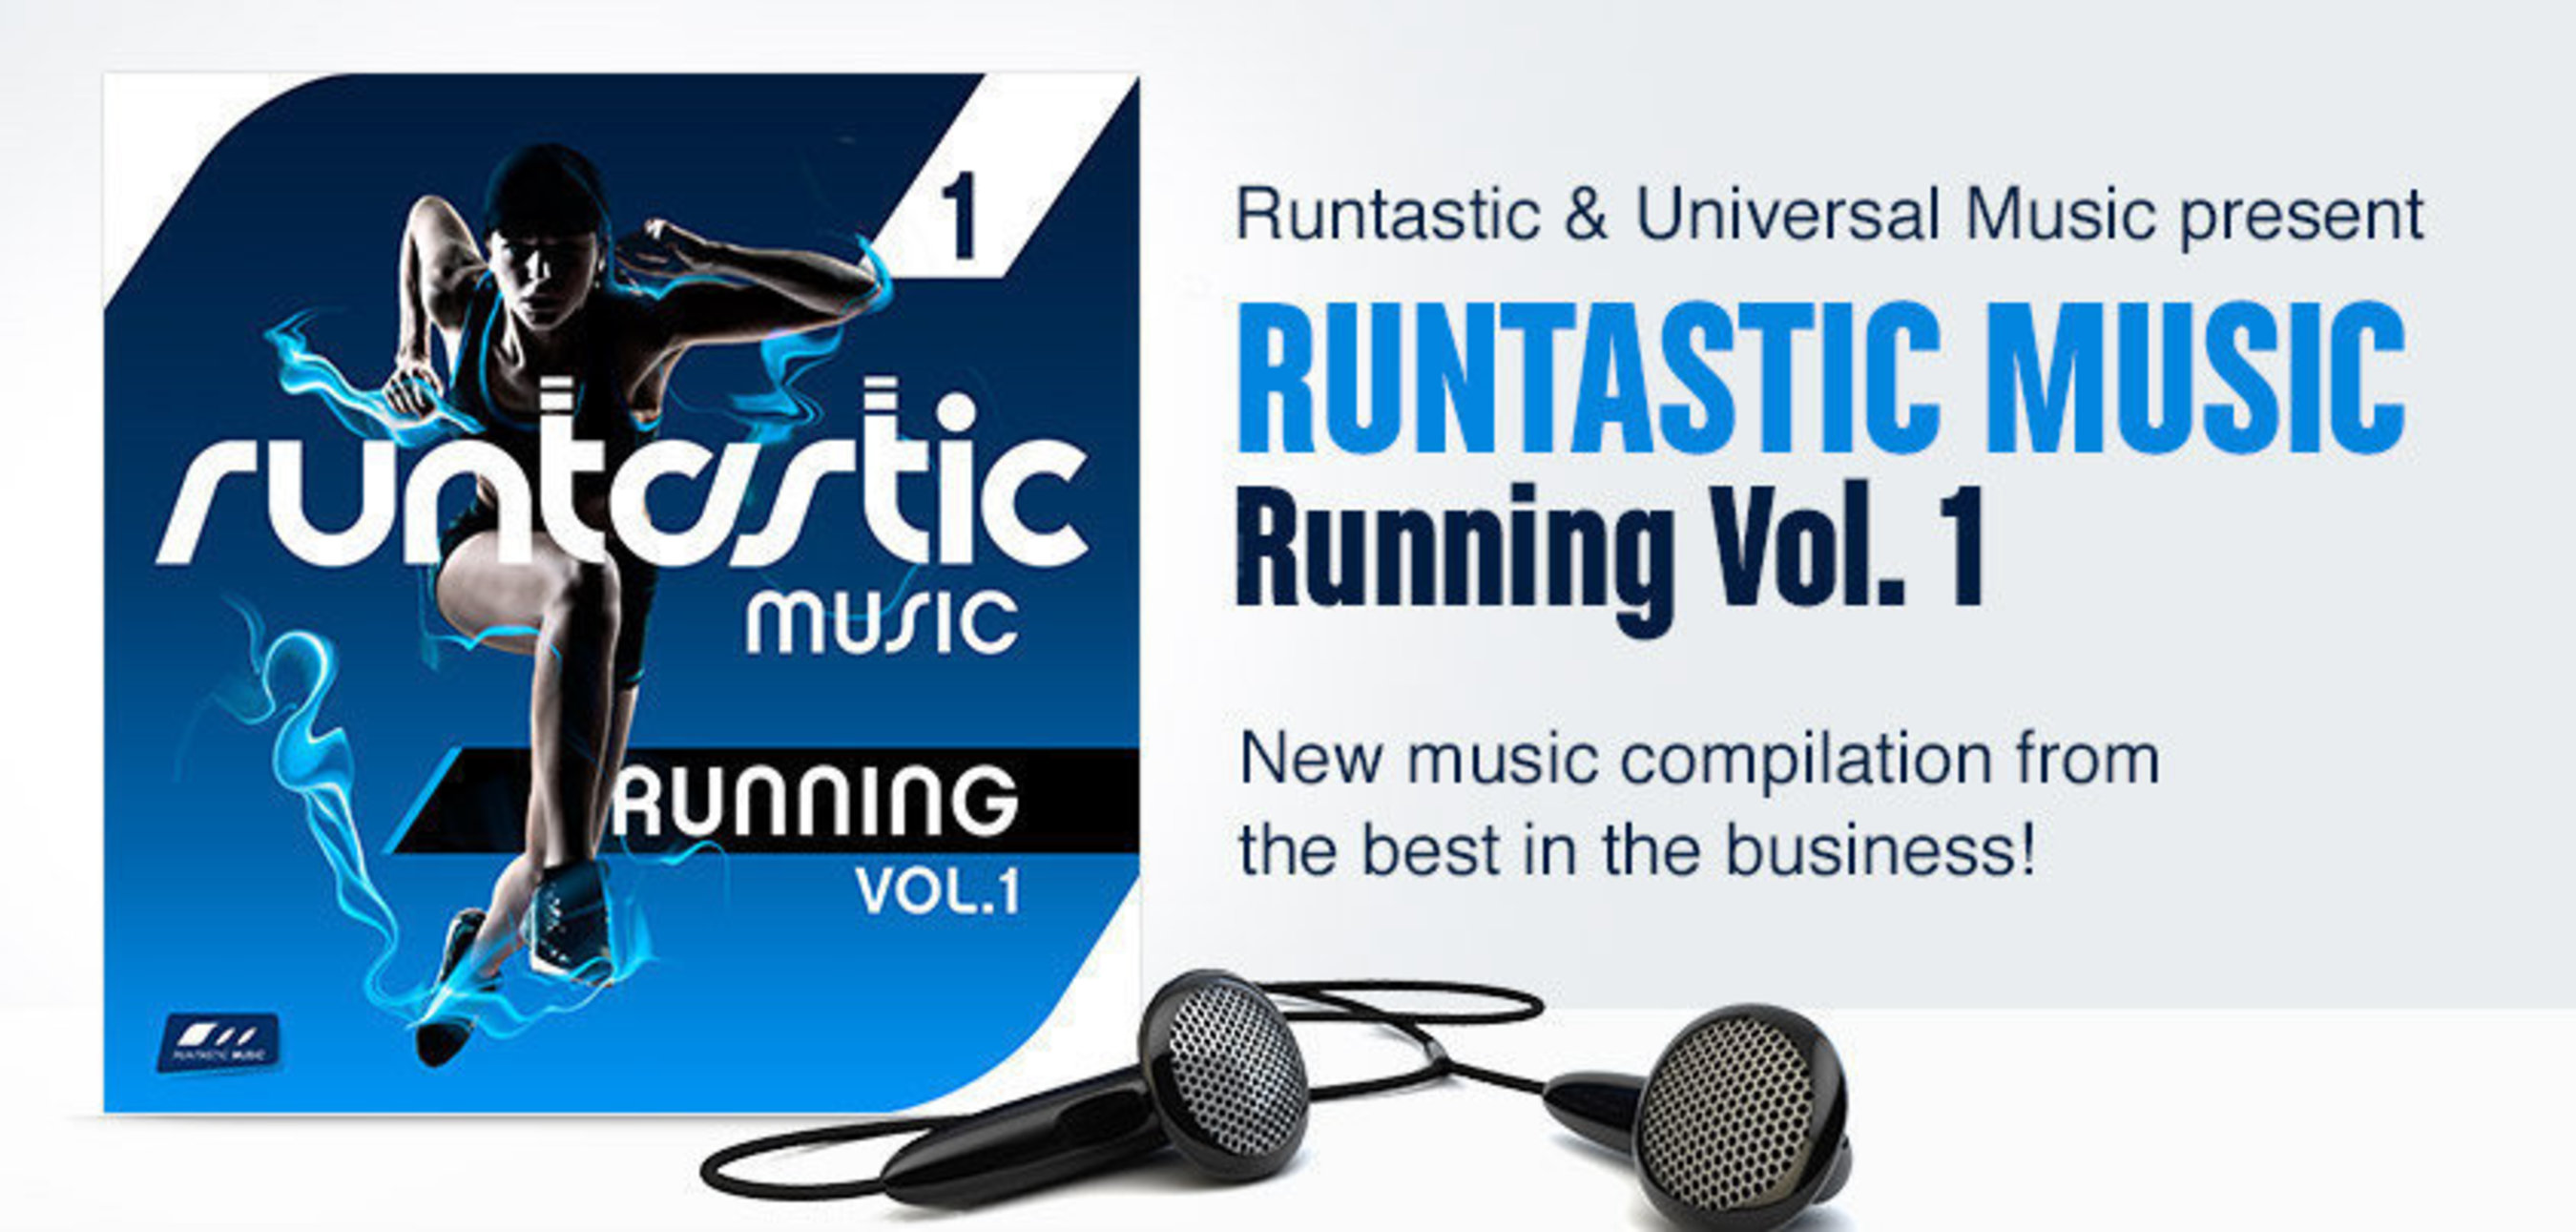 Runtastic Music - Running Vol. 1 (PRNewsFoto/Runtastic)